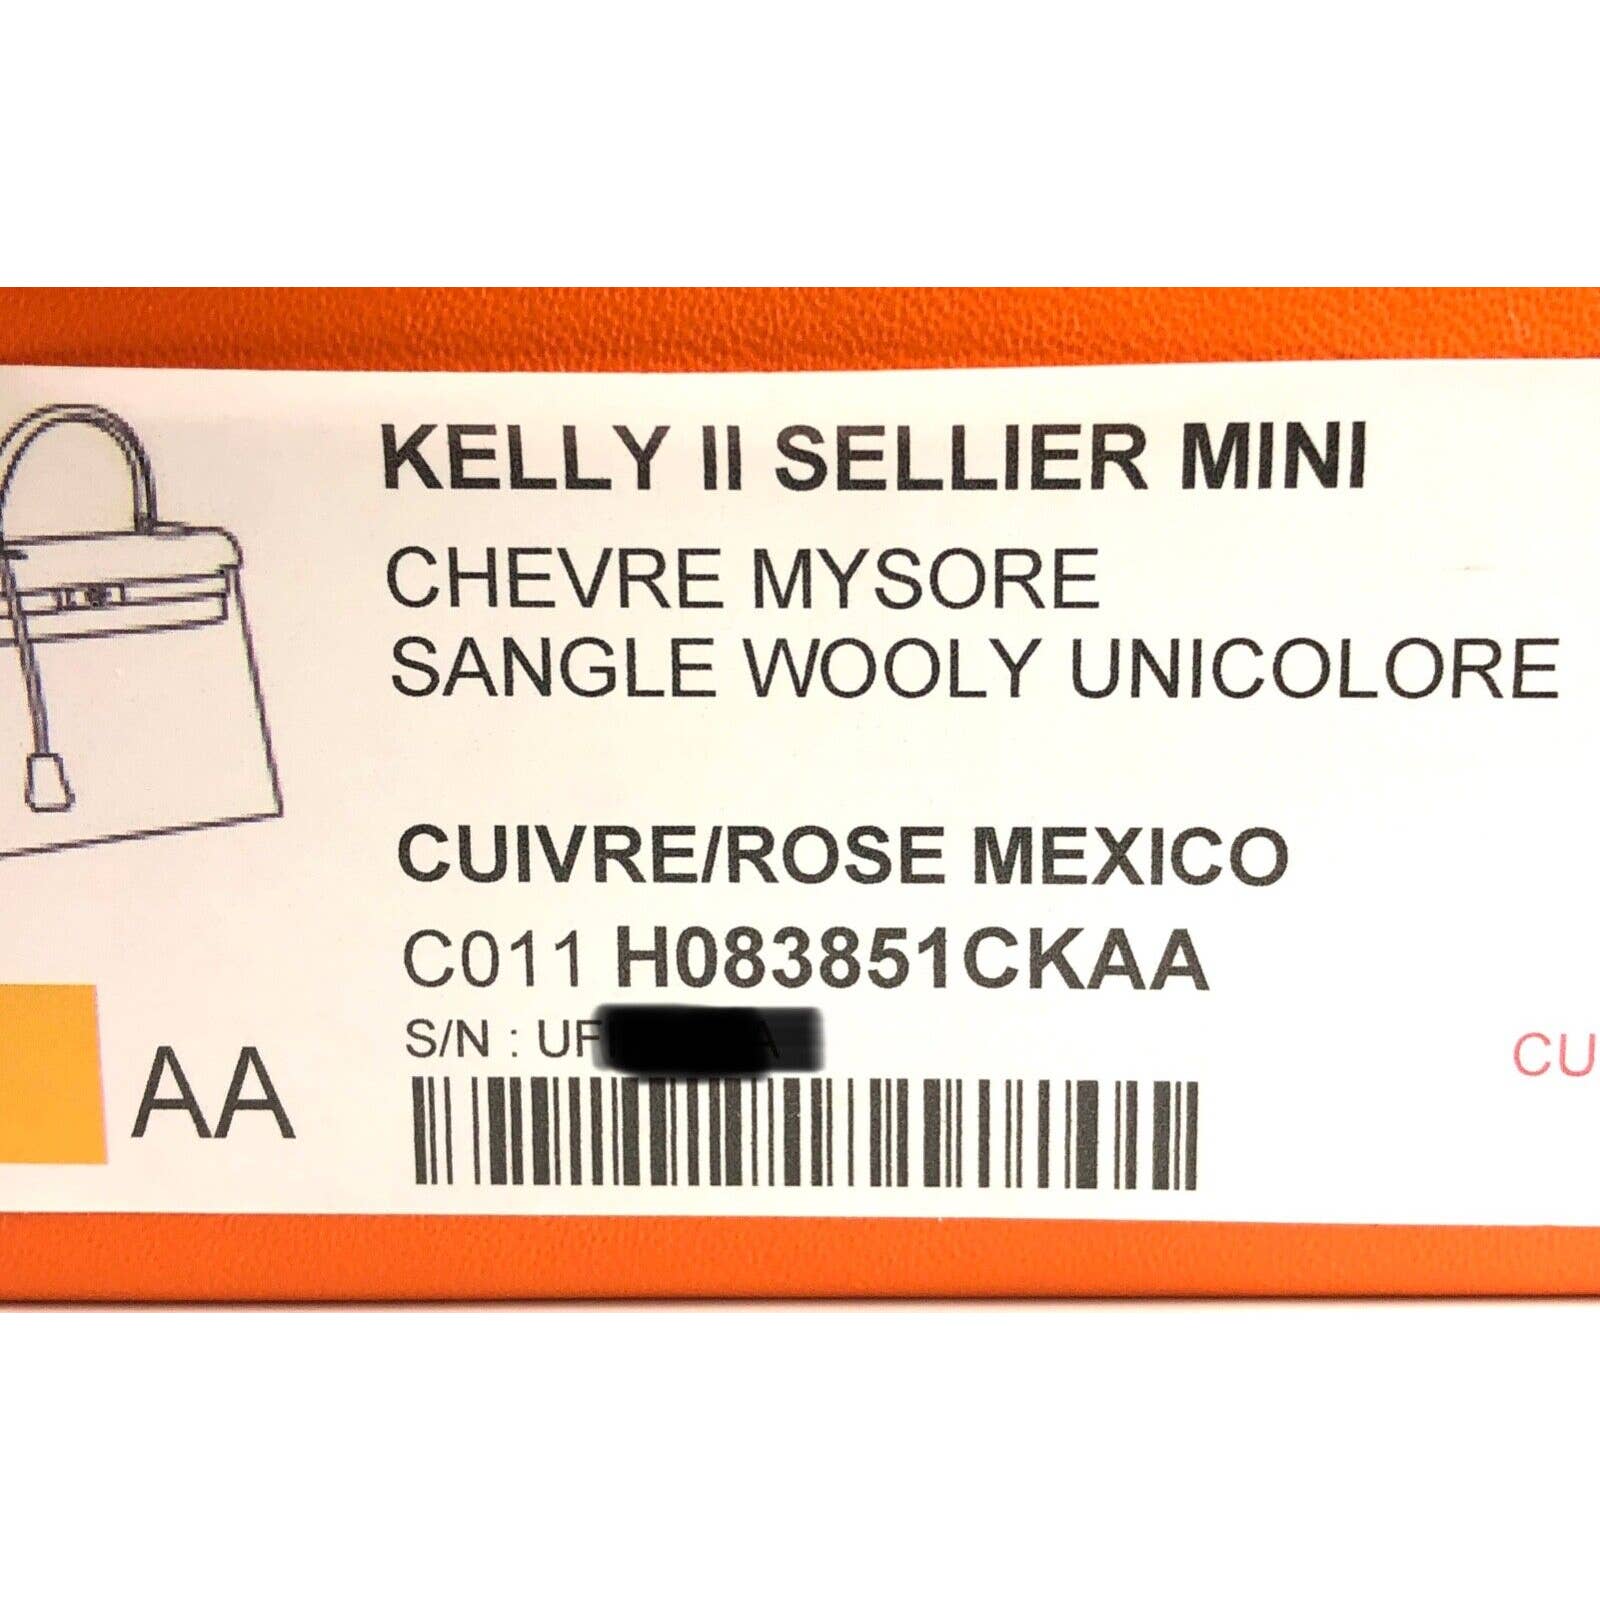 Hermes Mini Kelly II Bag in Original Chevre Leather Olive Green